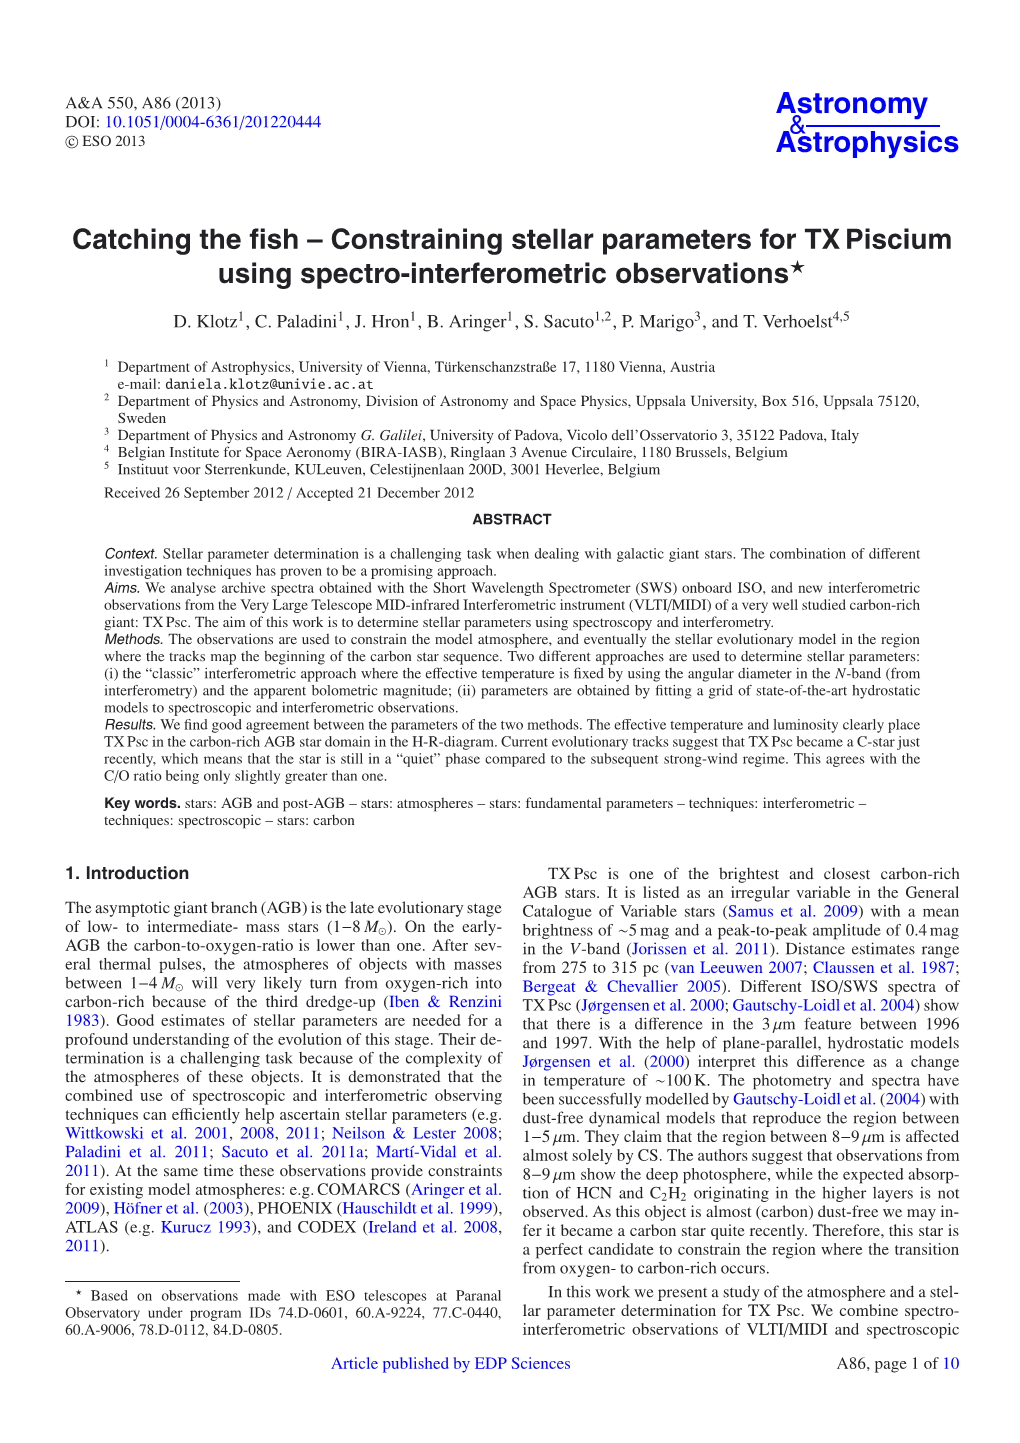 Constraining Stellar Parameters for TX Piscium Using Spectro-Interferometric Observations